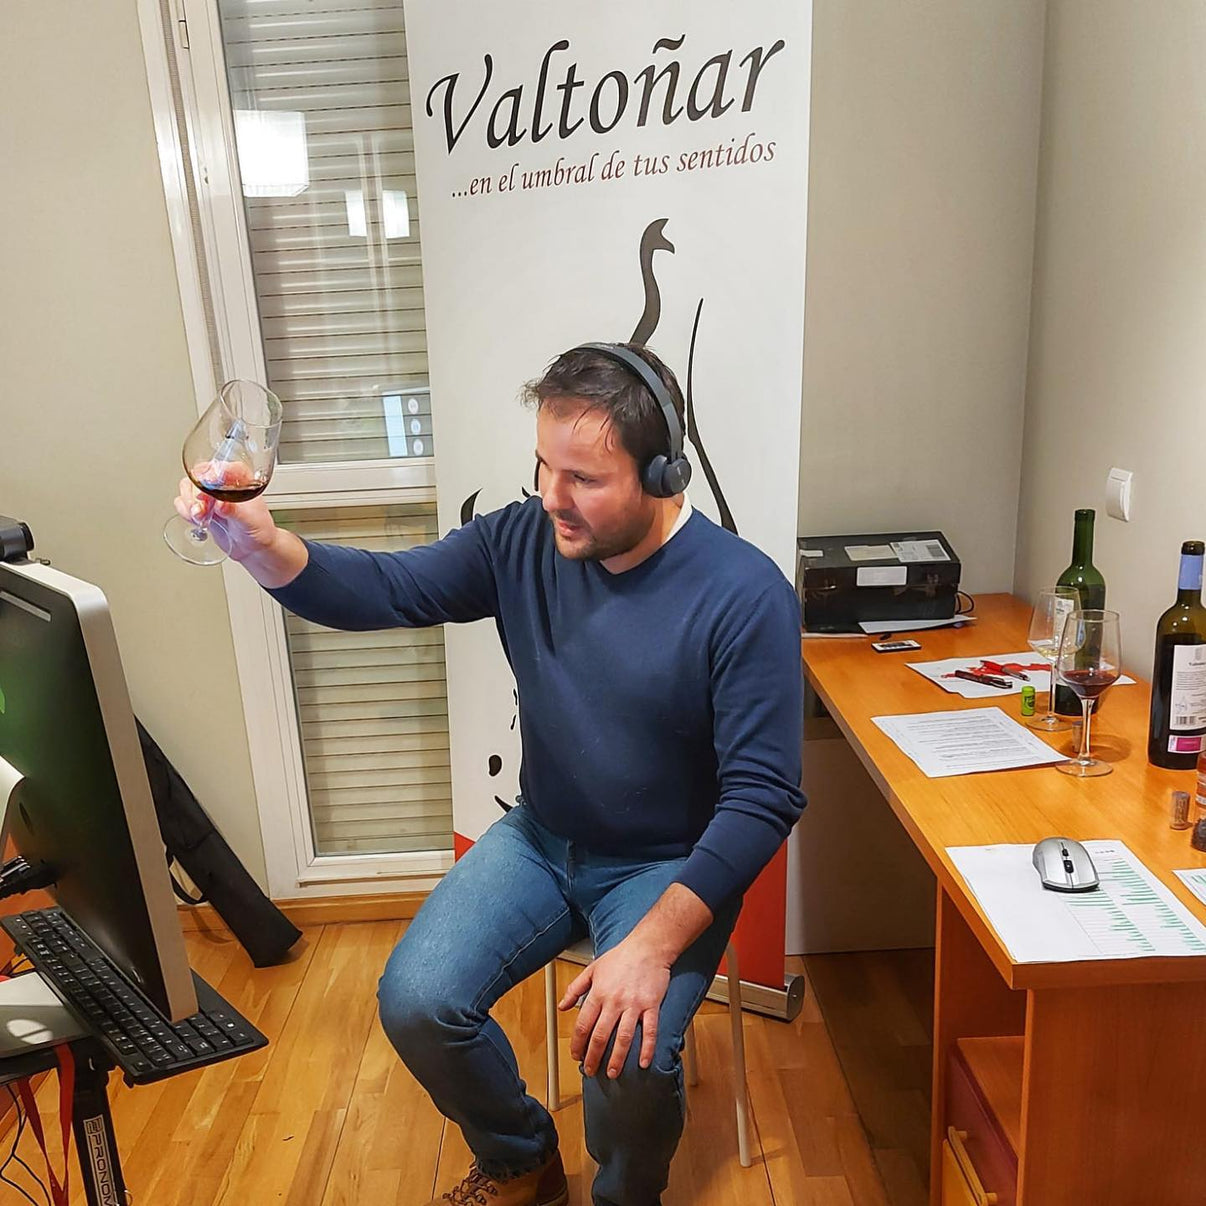 European Virtual Wine Tasting Experience from Spain (full bottles)